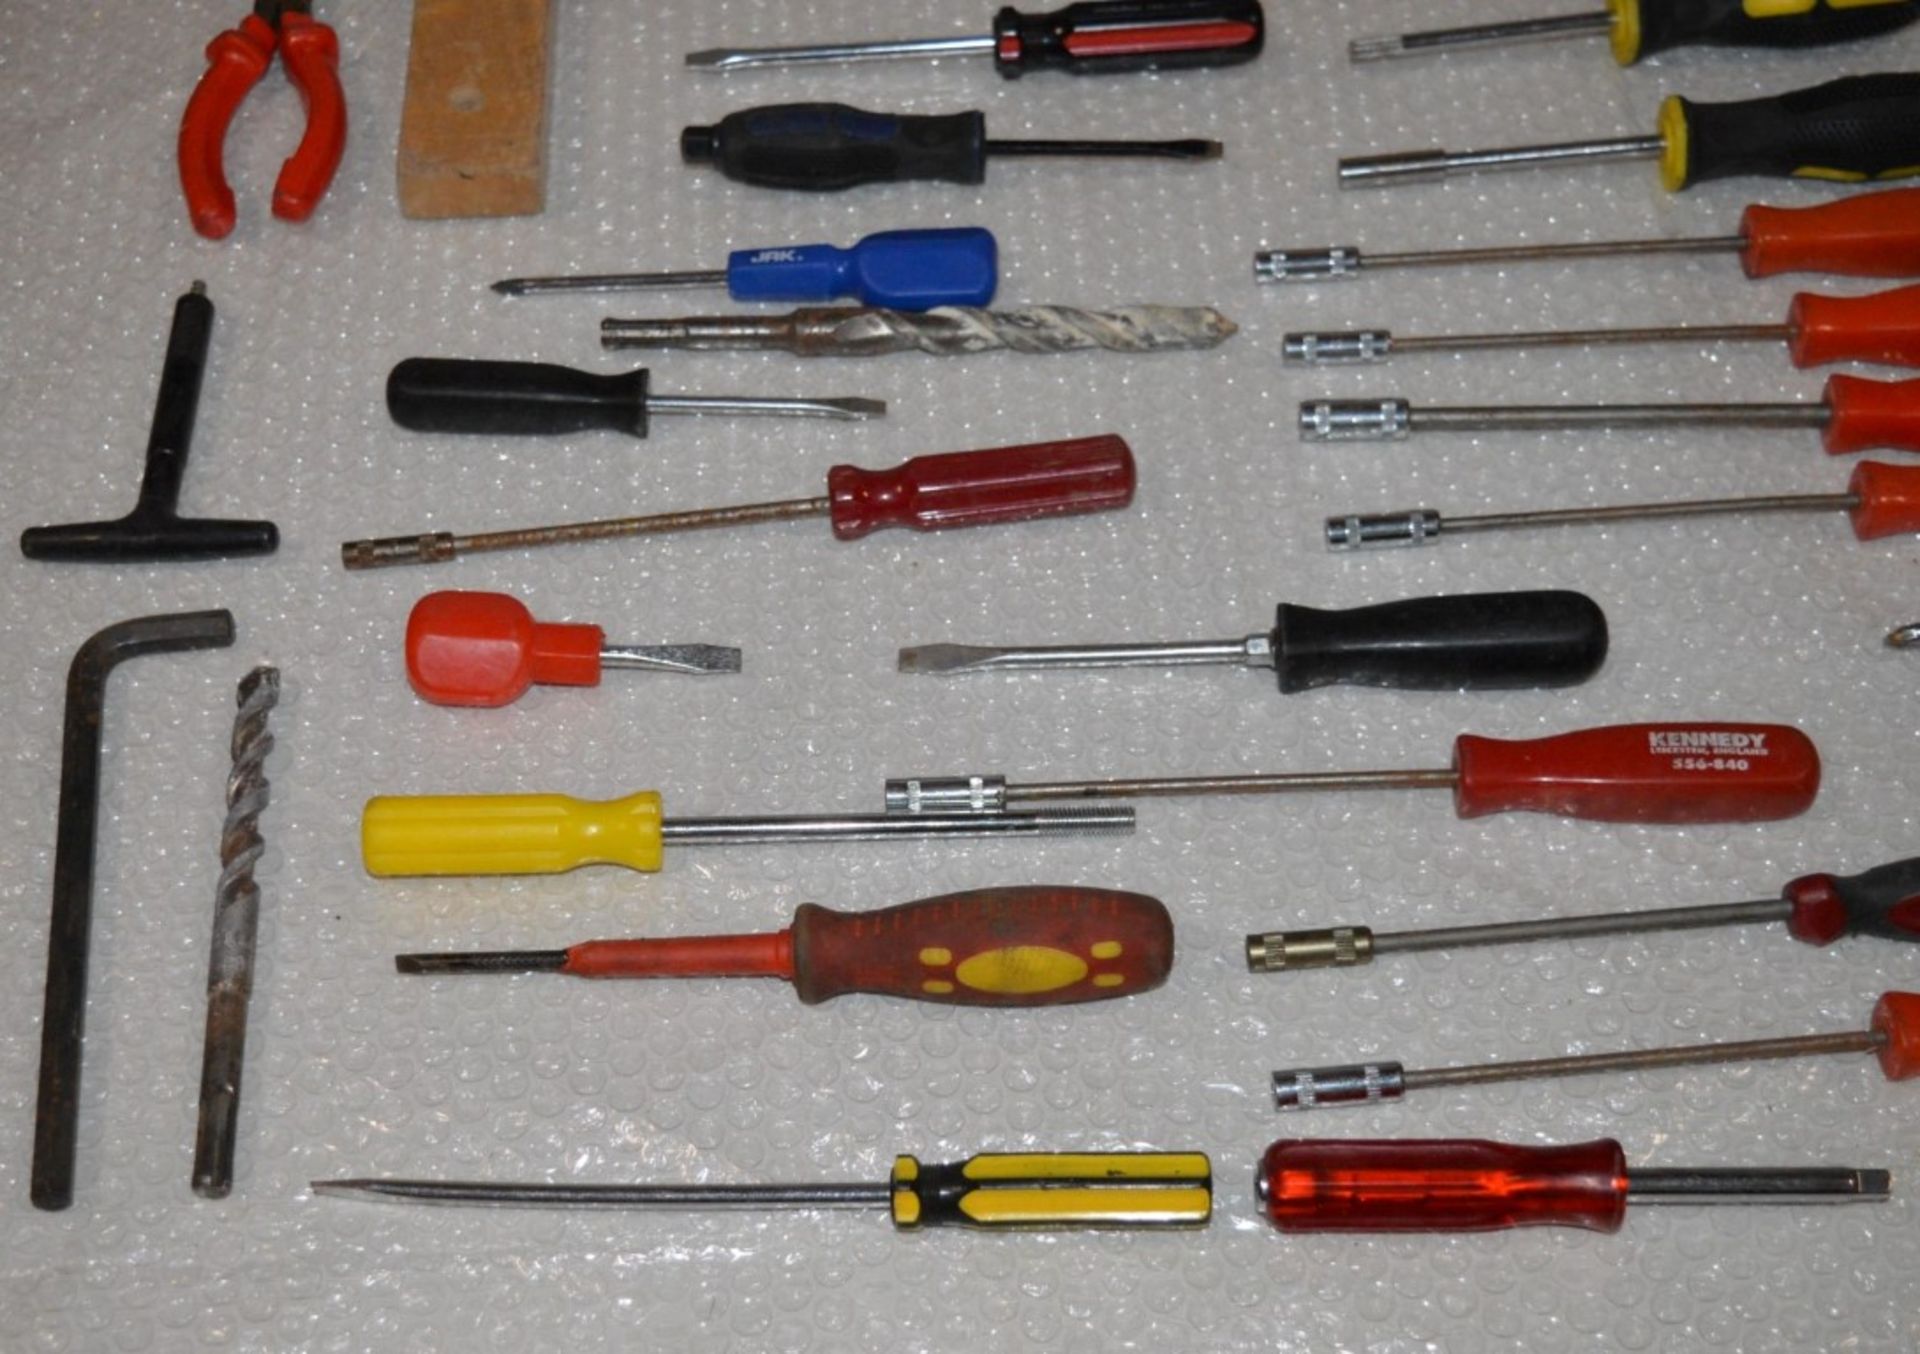 54 x Various Hand Tools Iincluding Screwdrivers, Saws, Bores, Drill Bits, Allen Keys, Hex Head Screw - Image 12 of 15